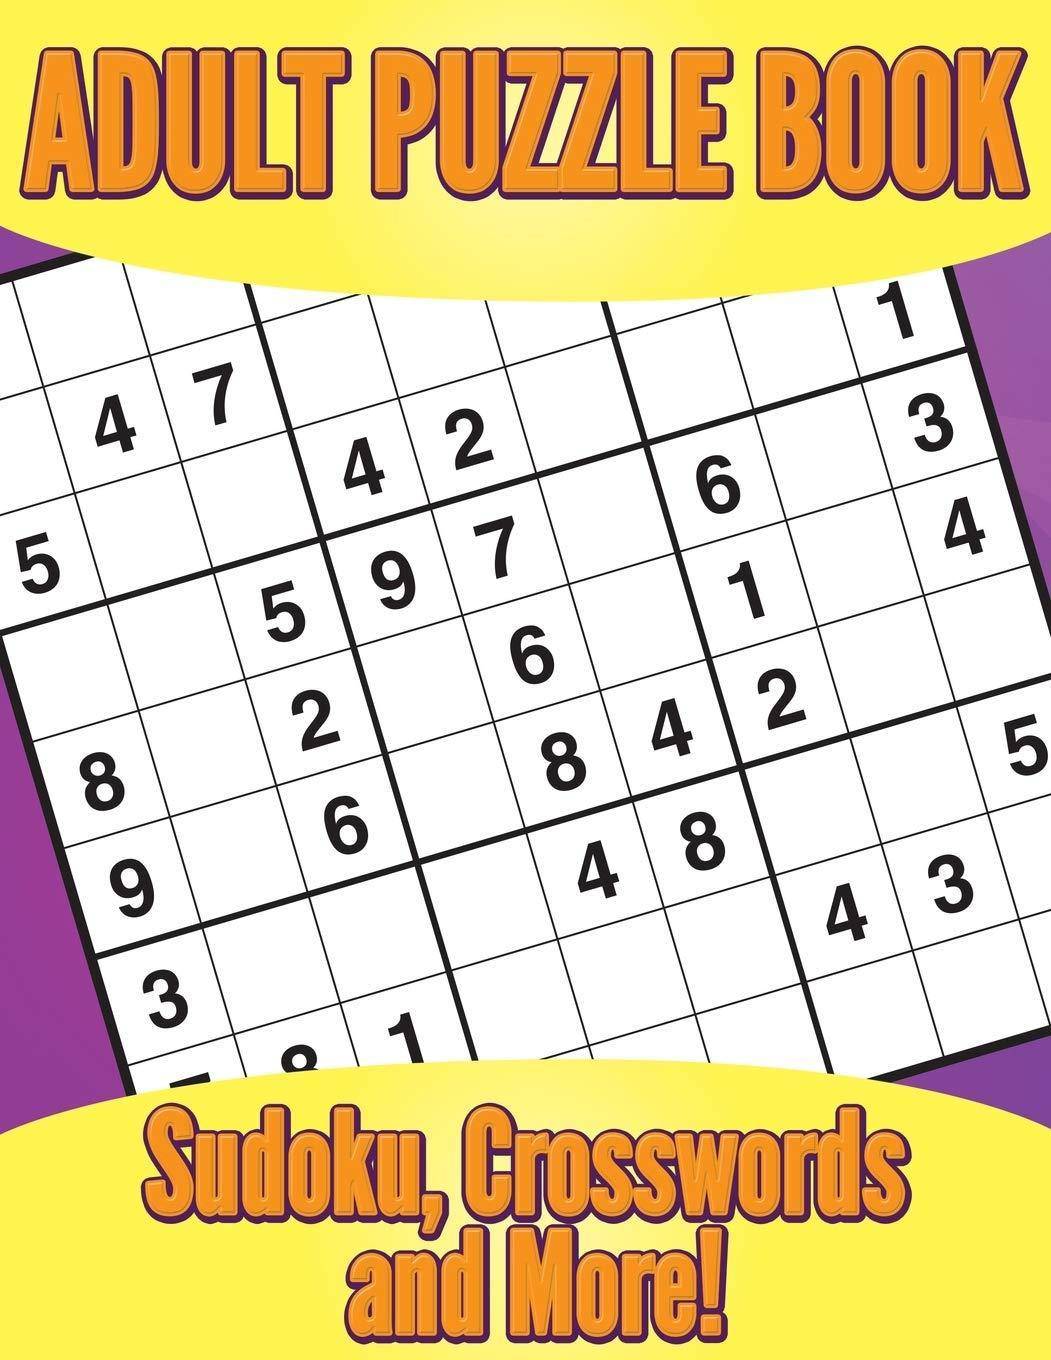 Adult Puzzle Book: Sudoku, Crosswords and More! - SureShot Books Publishing LLC